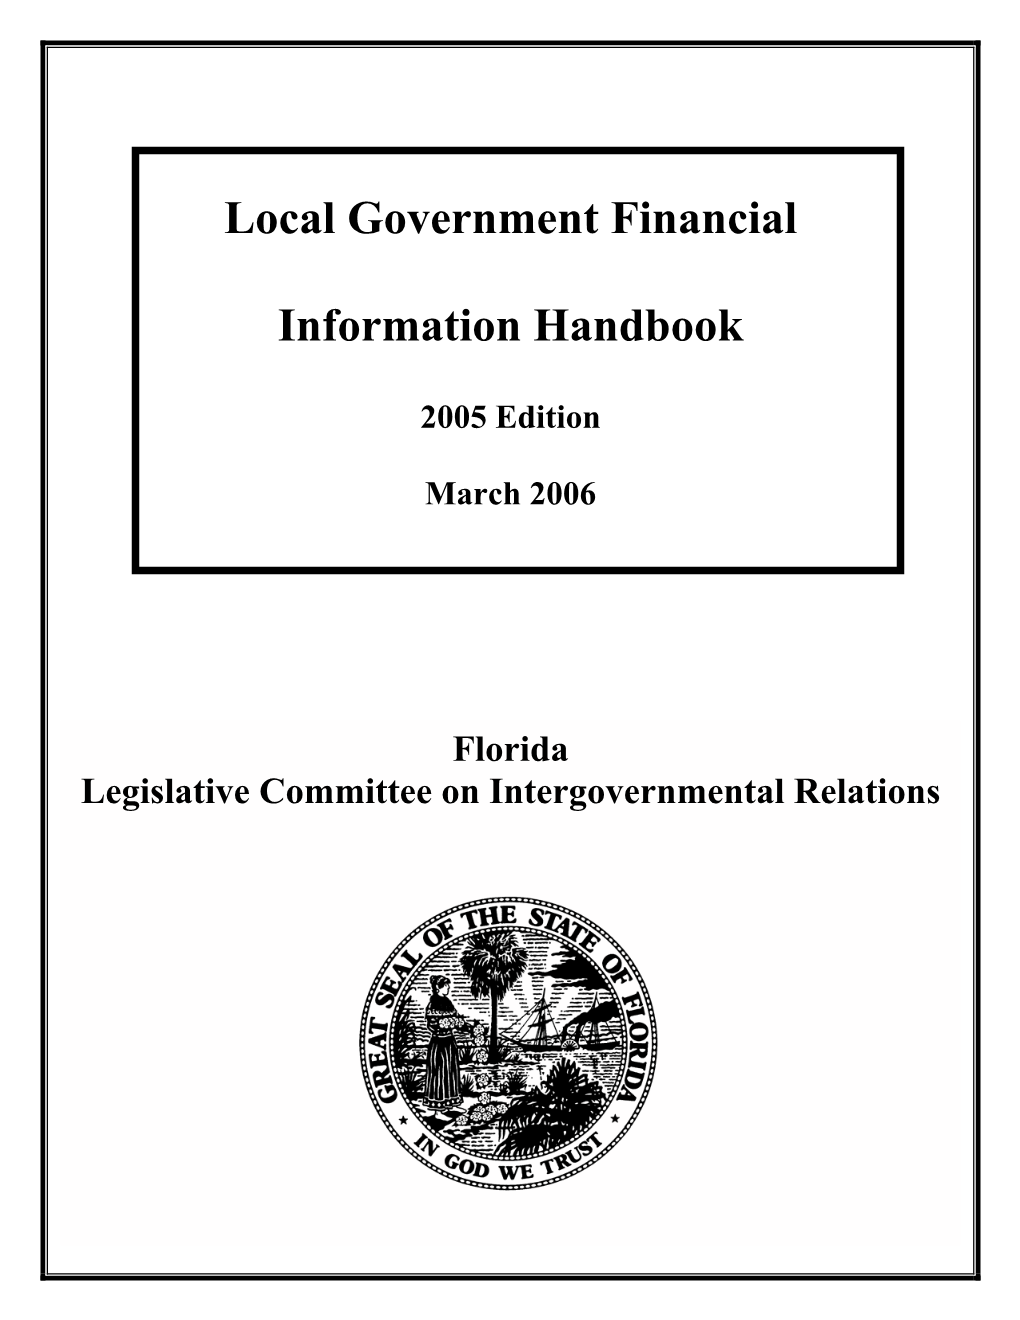 Local Government Financial Information Handbook